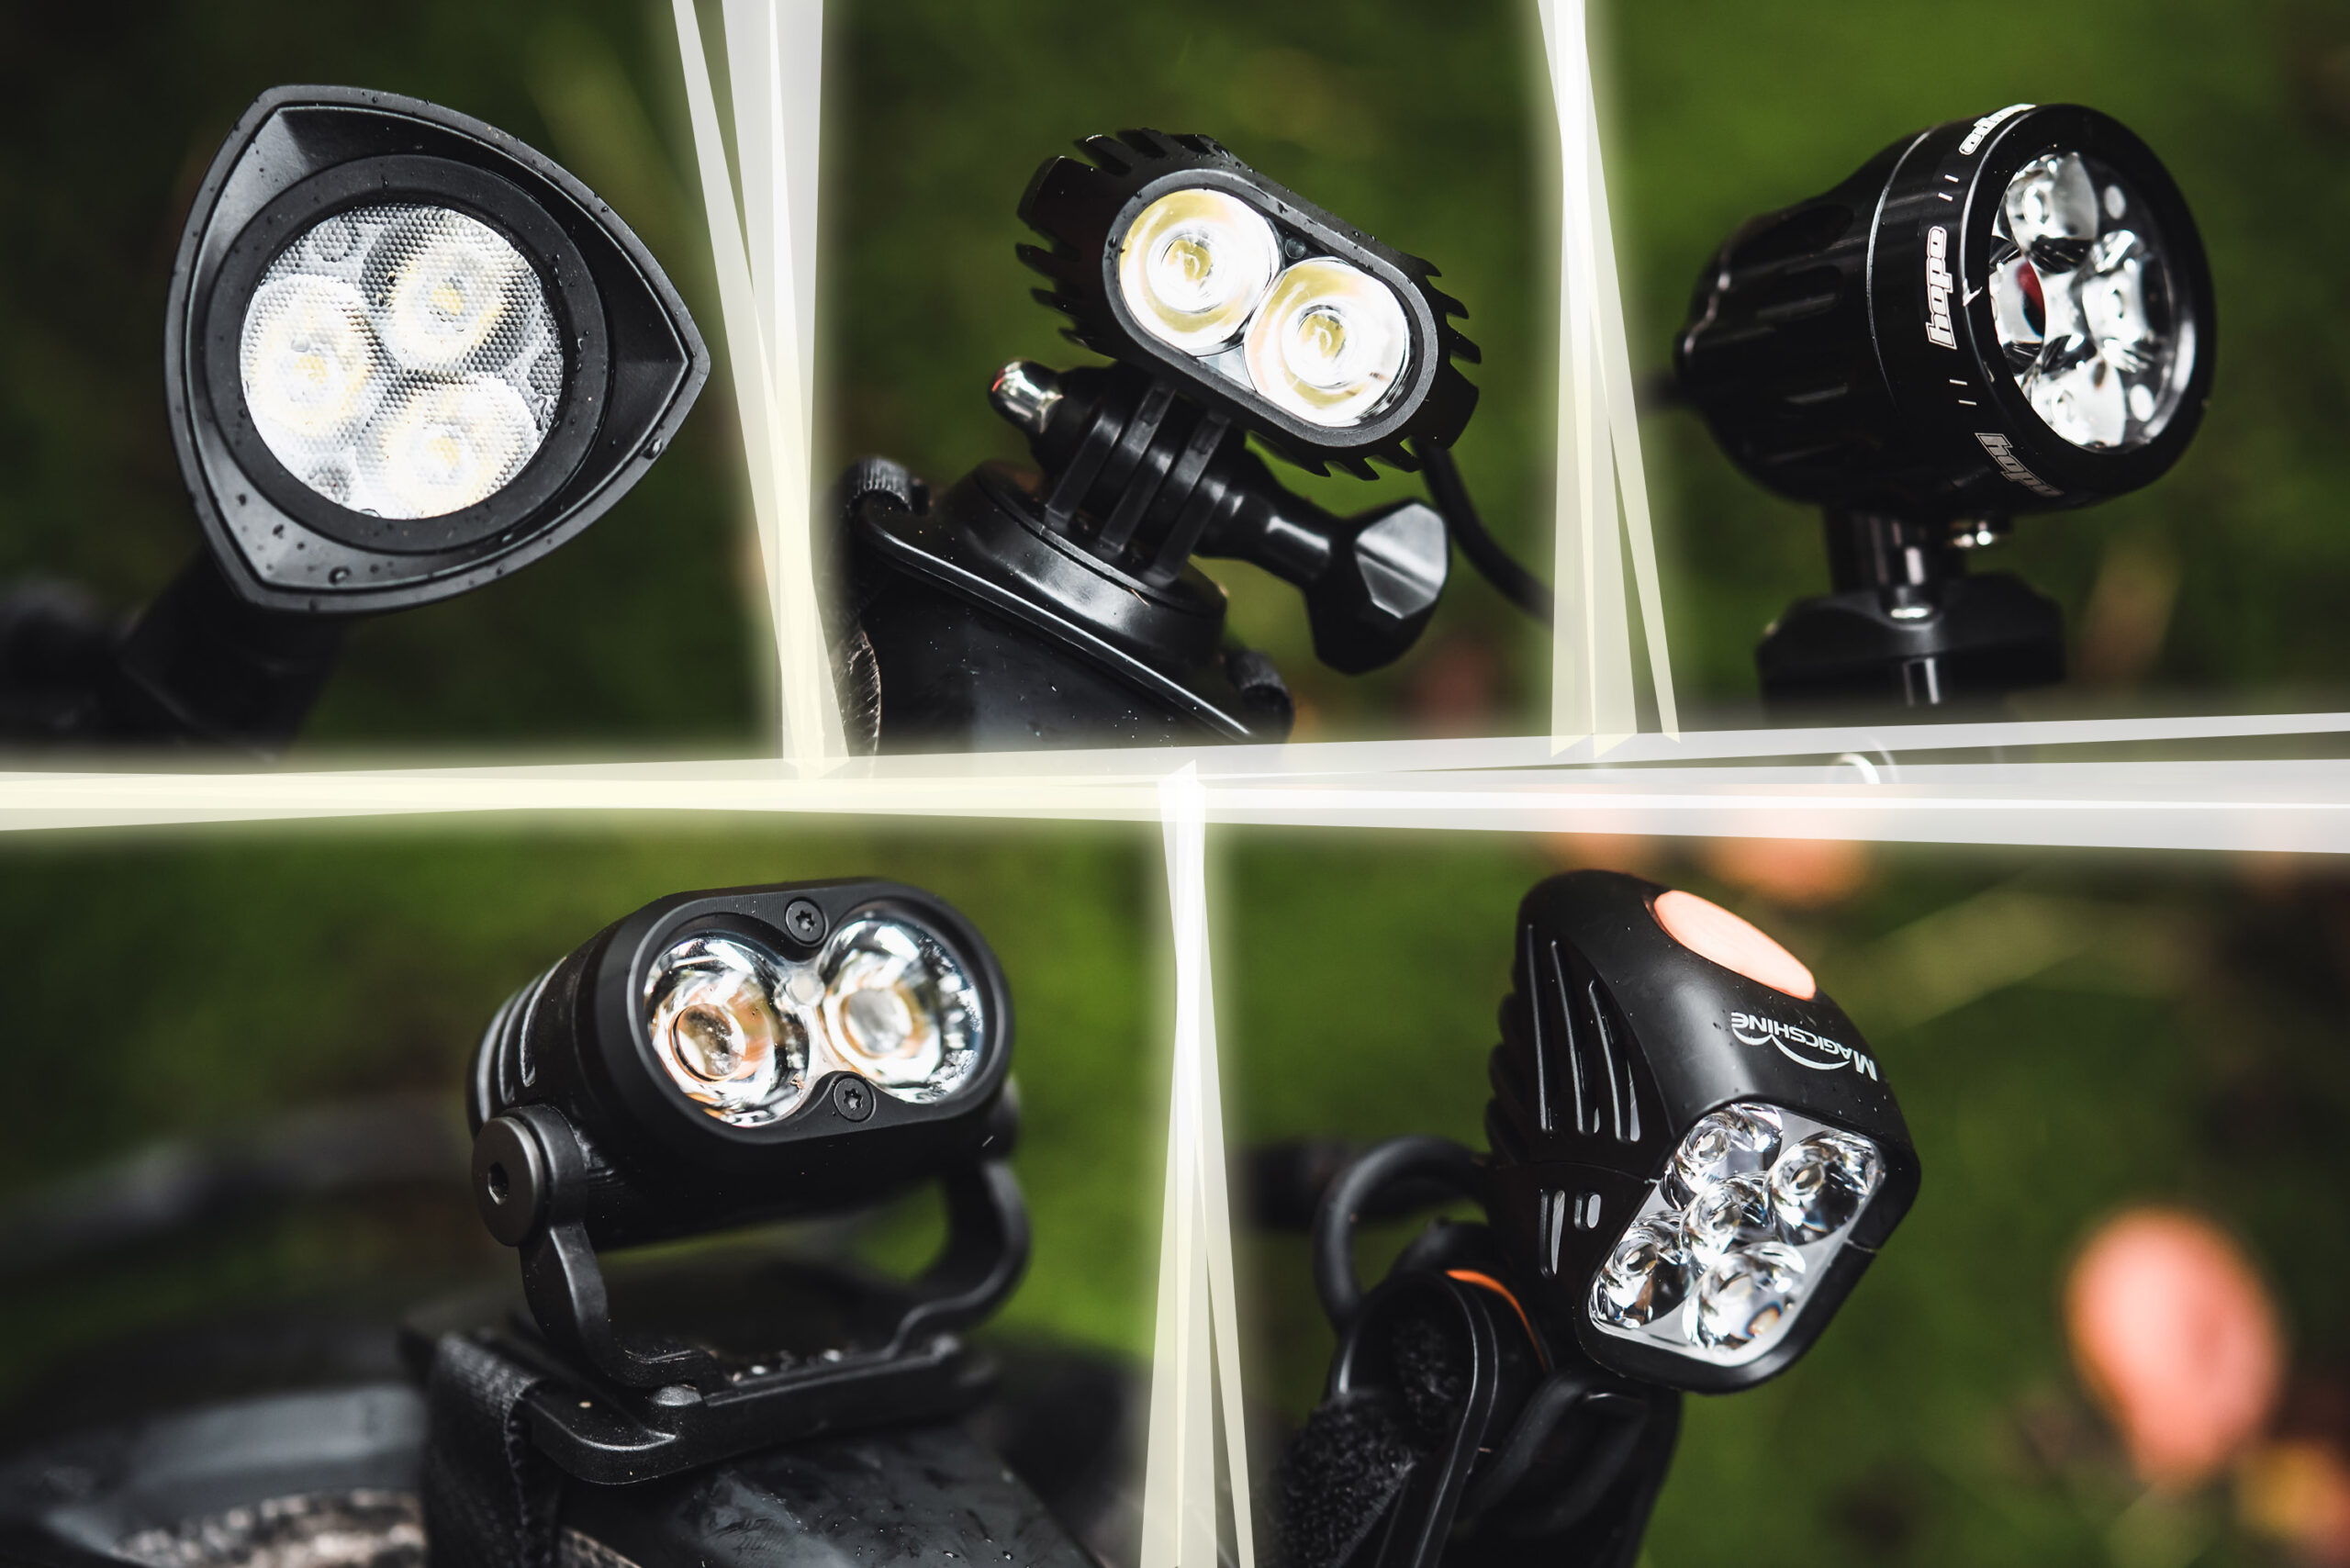 Licht ins Dunkel bringen: LED-Helmlampen